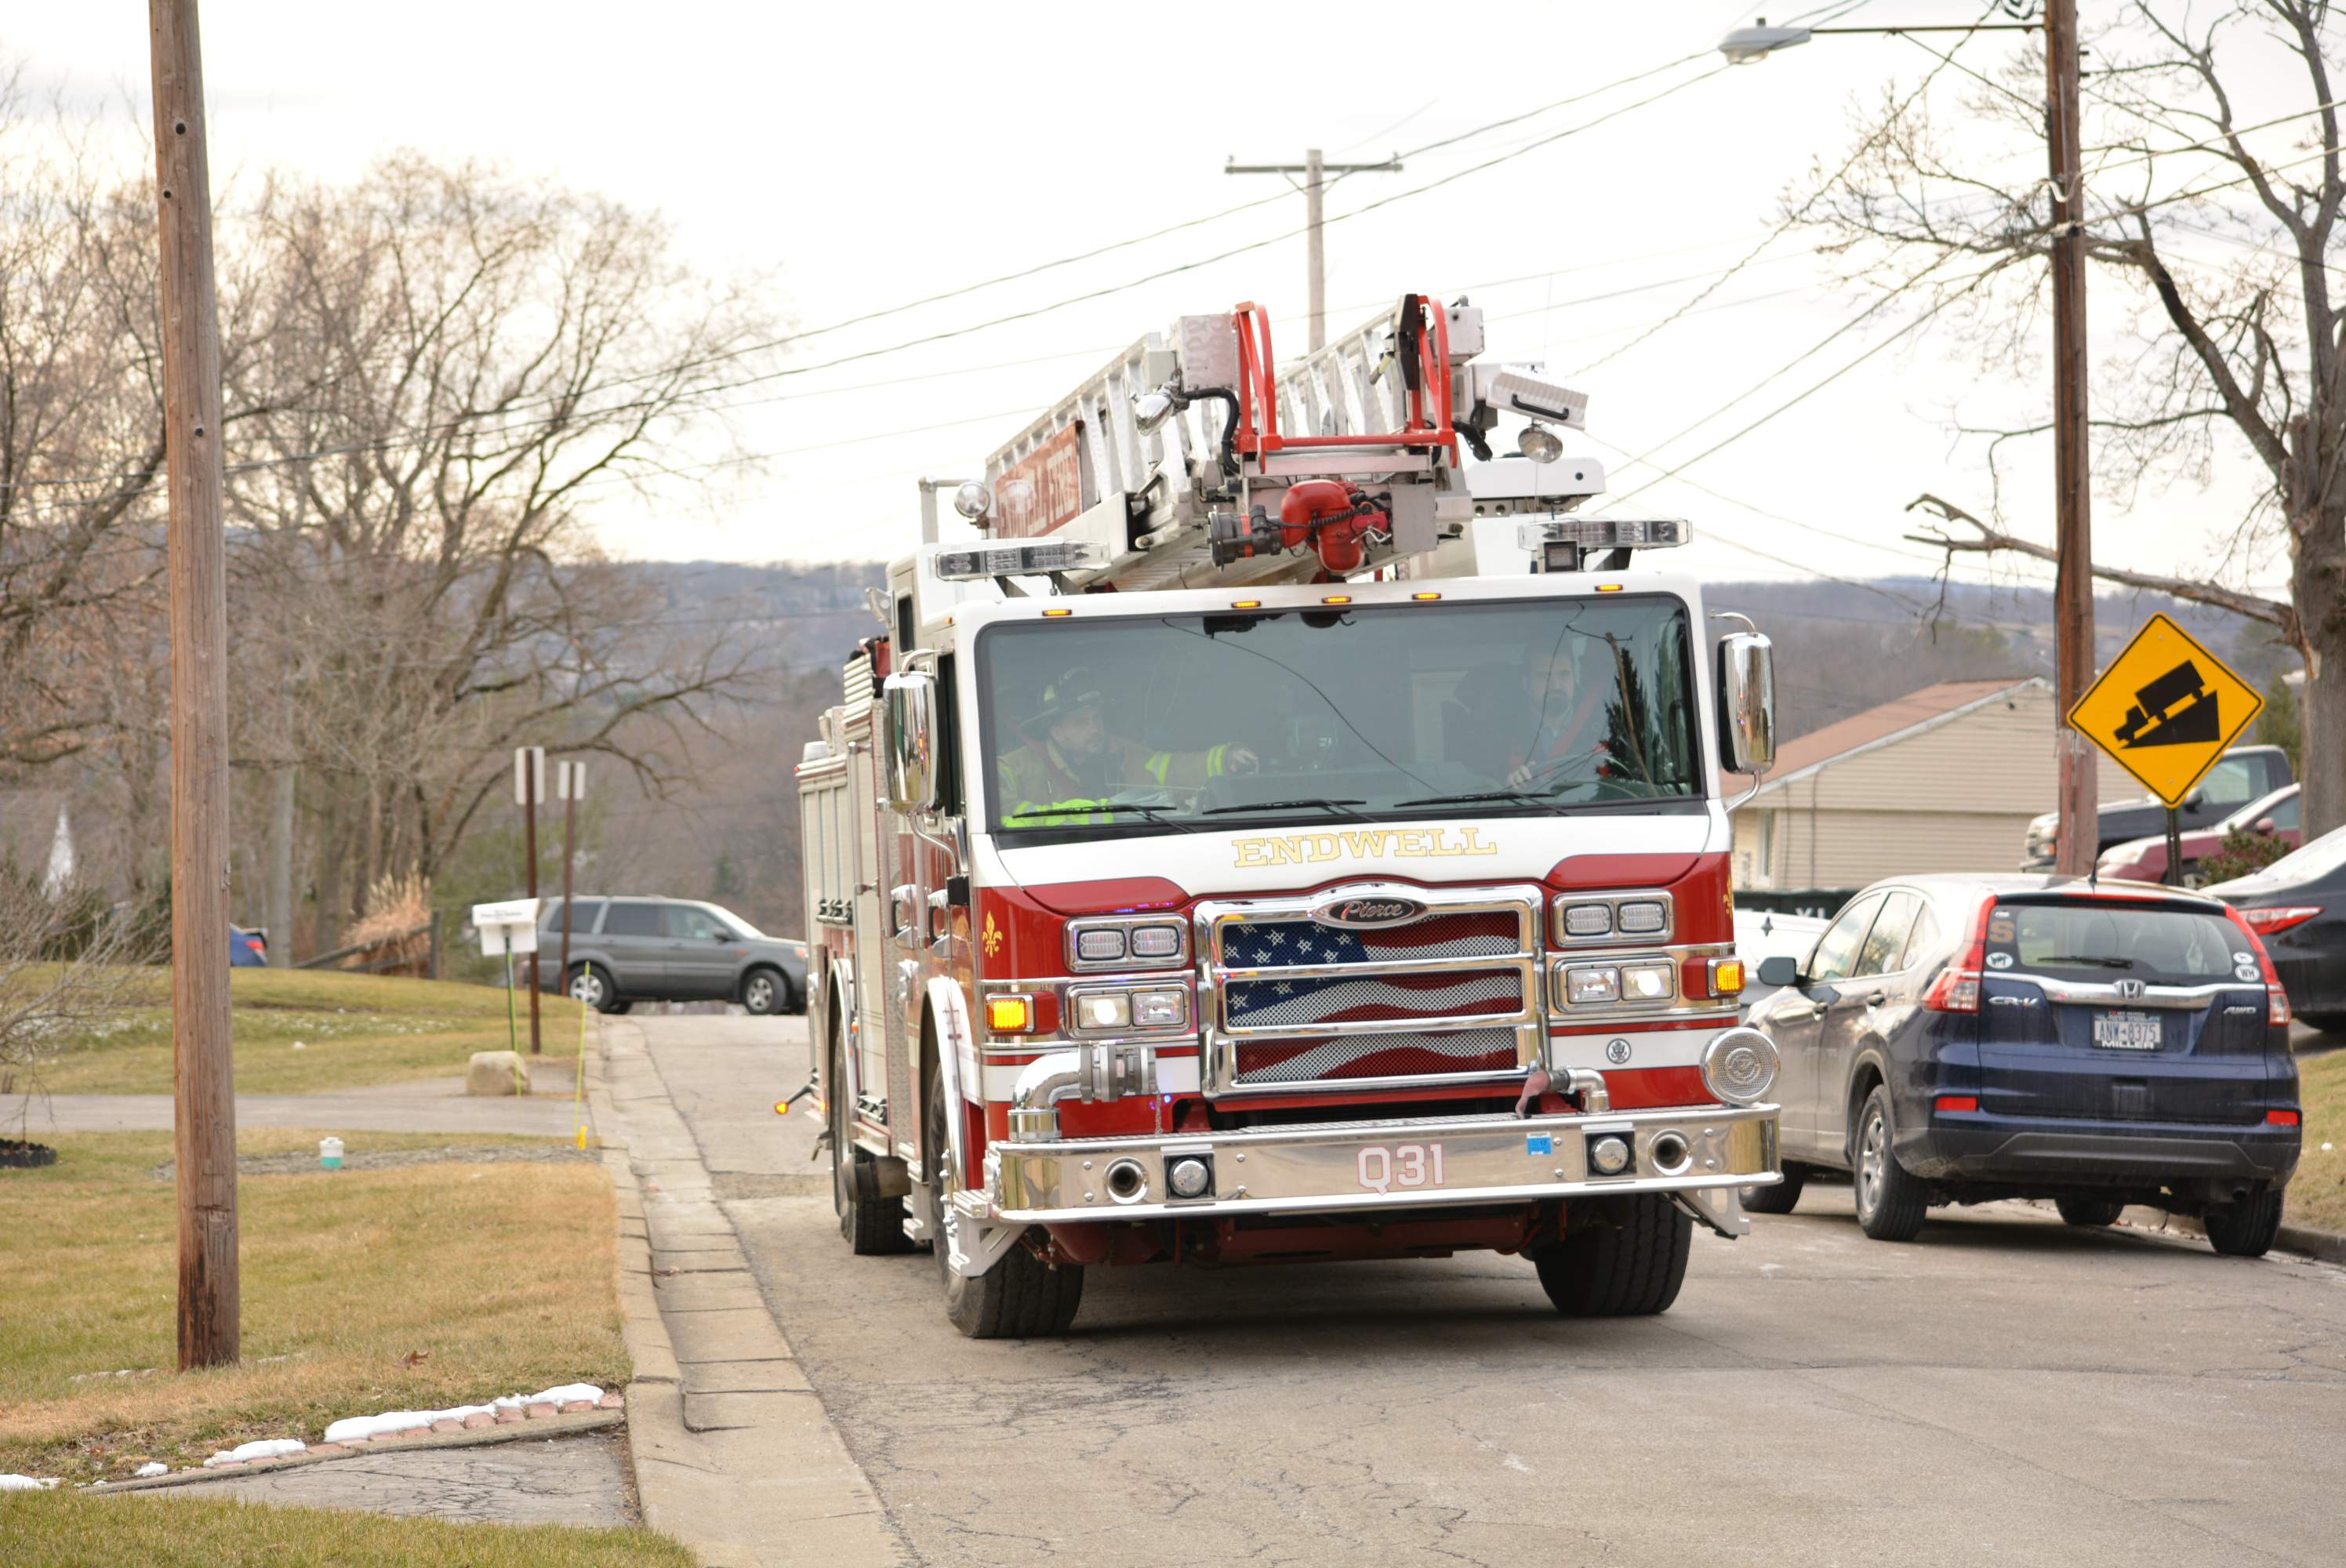 03-13-17  Response - Fire - 3634 Rath Ave